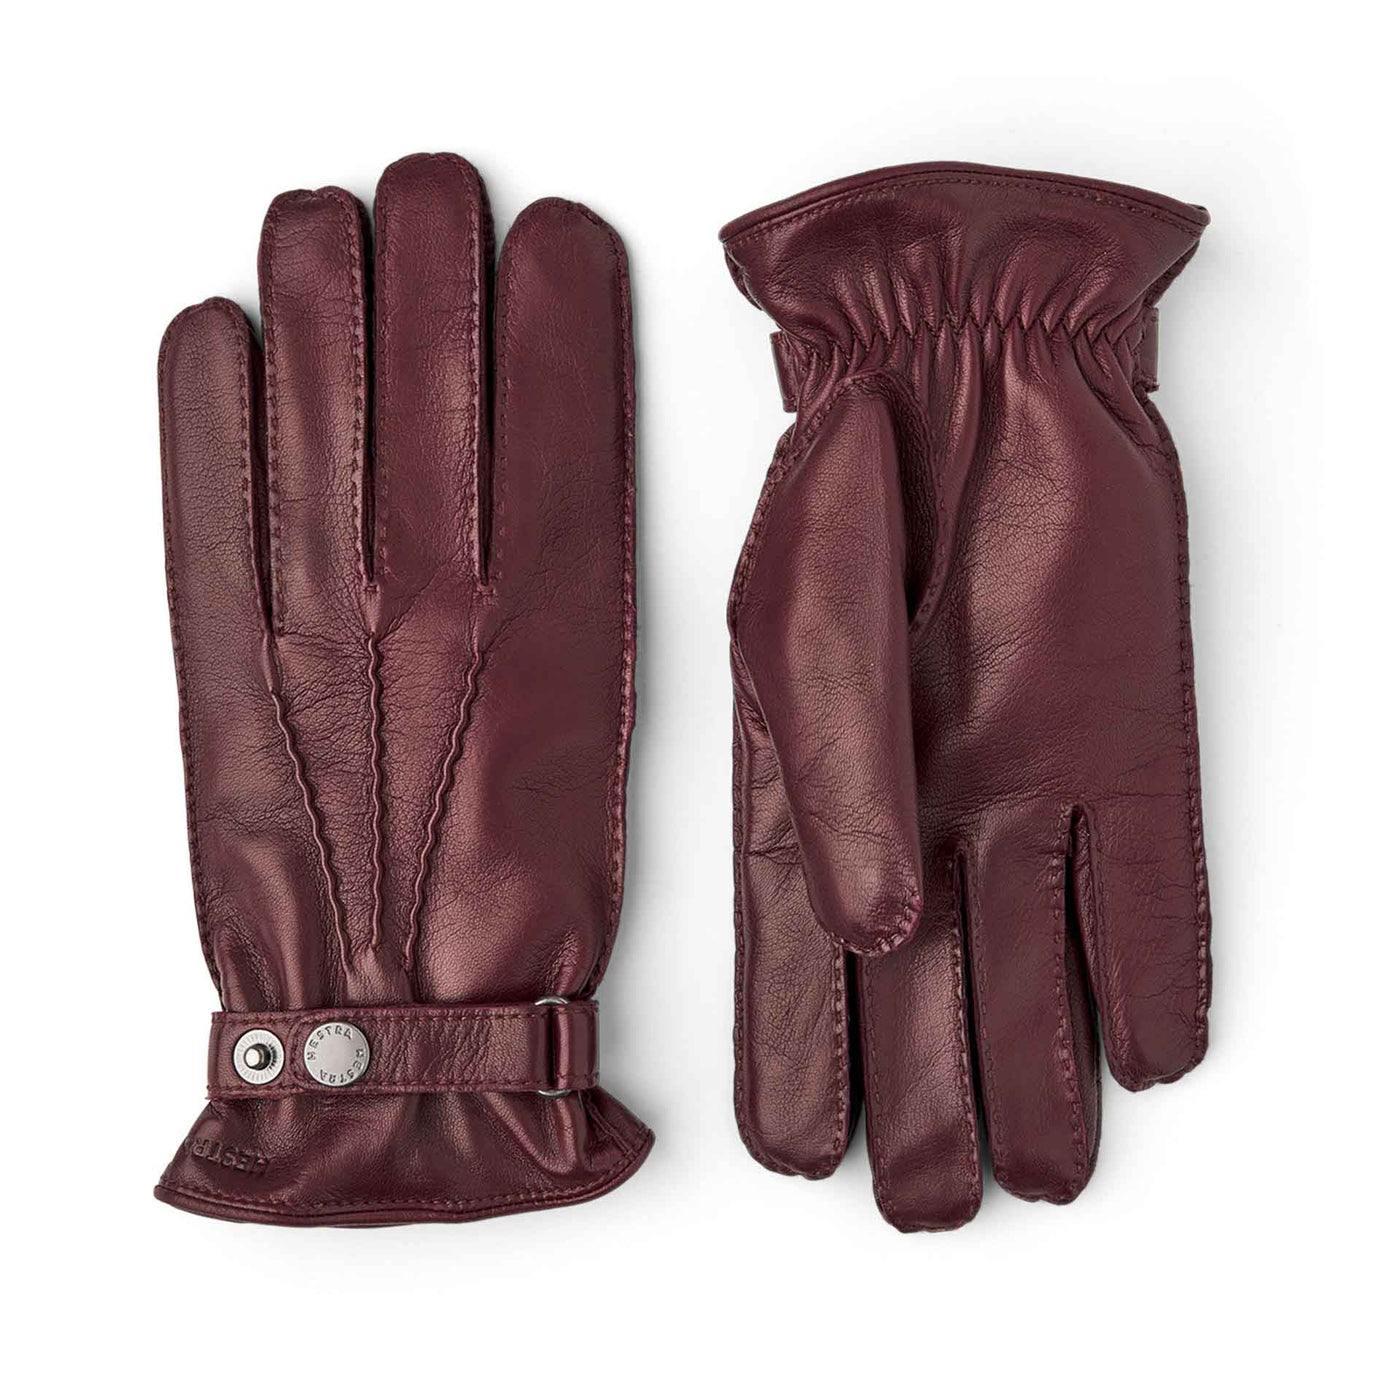 Hairsheep Leather Jake Buckle Gloves